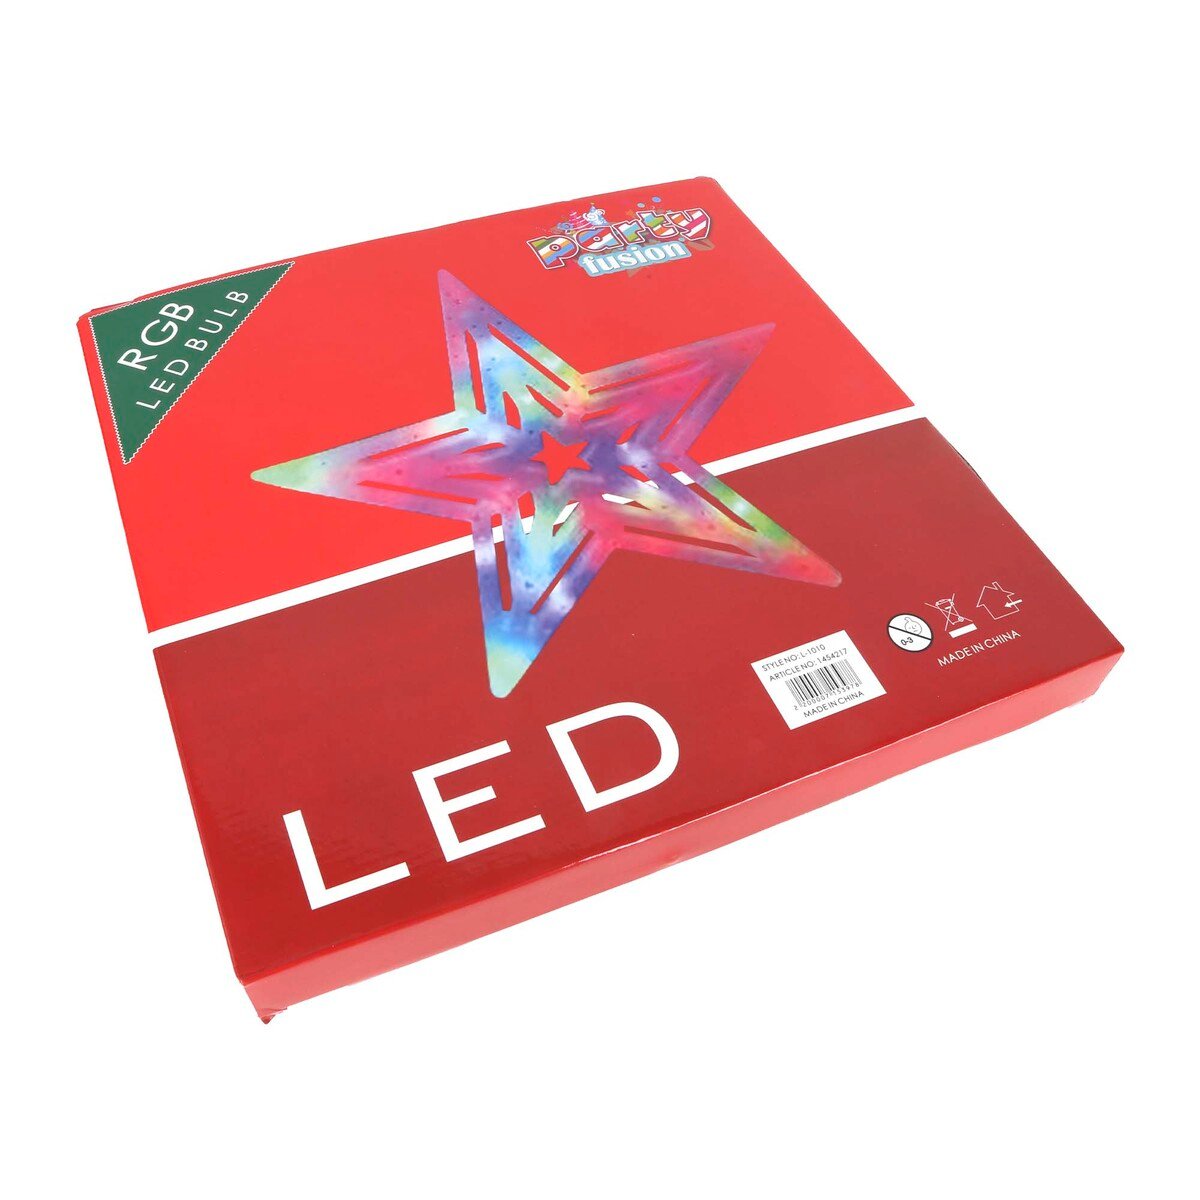 Party Fusion Xmas LED Star Lantern 45cm  Assorted